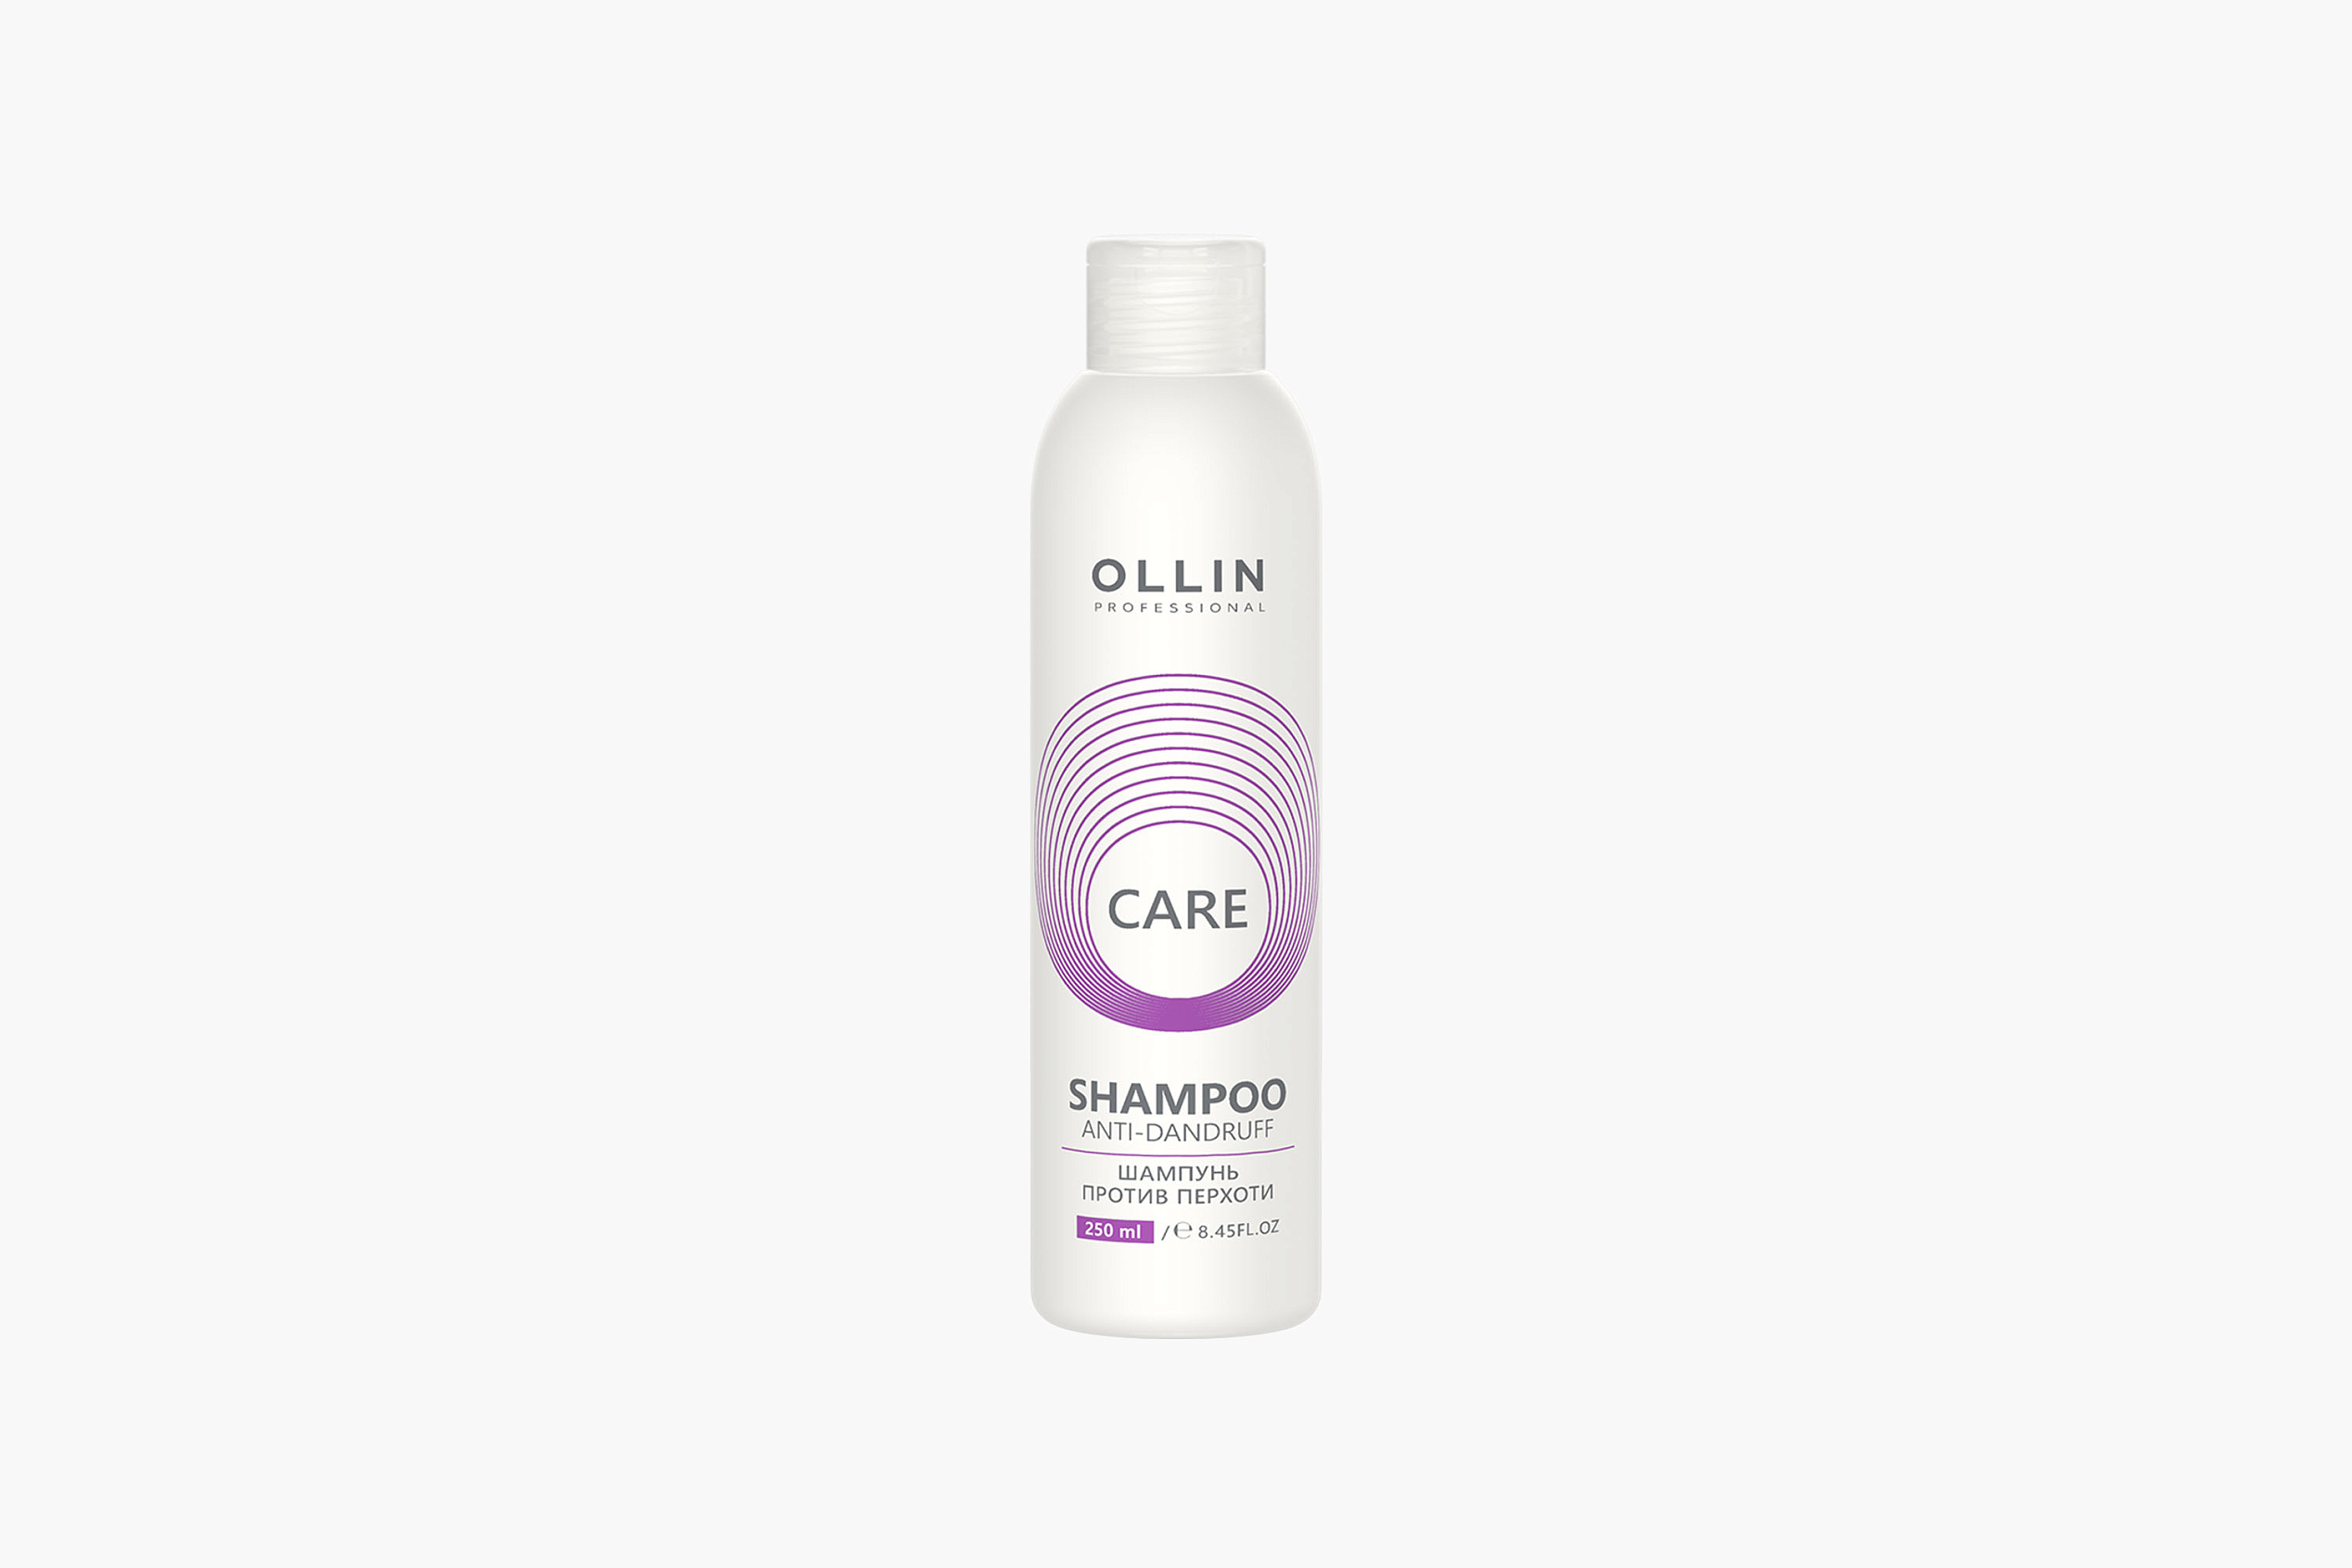 Ollin Professional Care Anti-Dandruff Shampoo фото 1